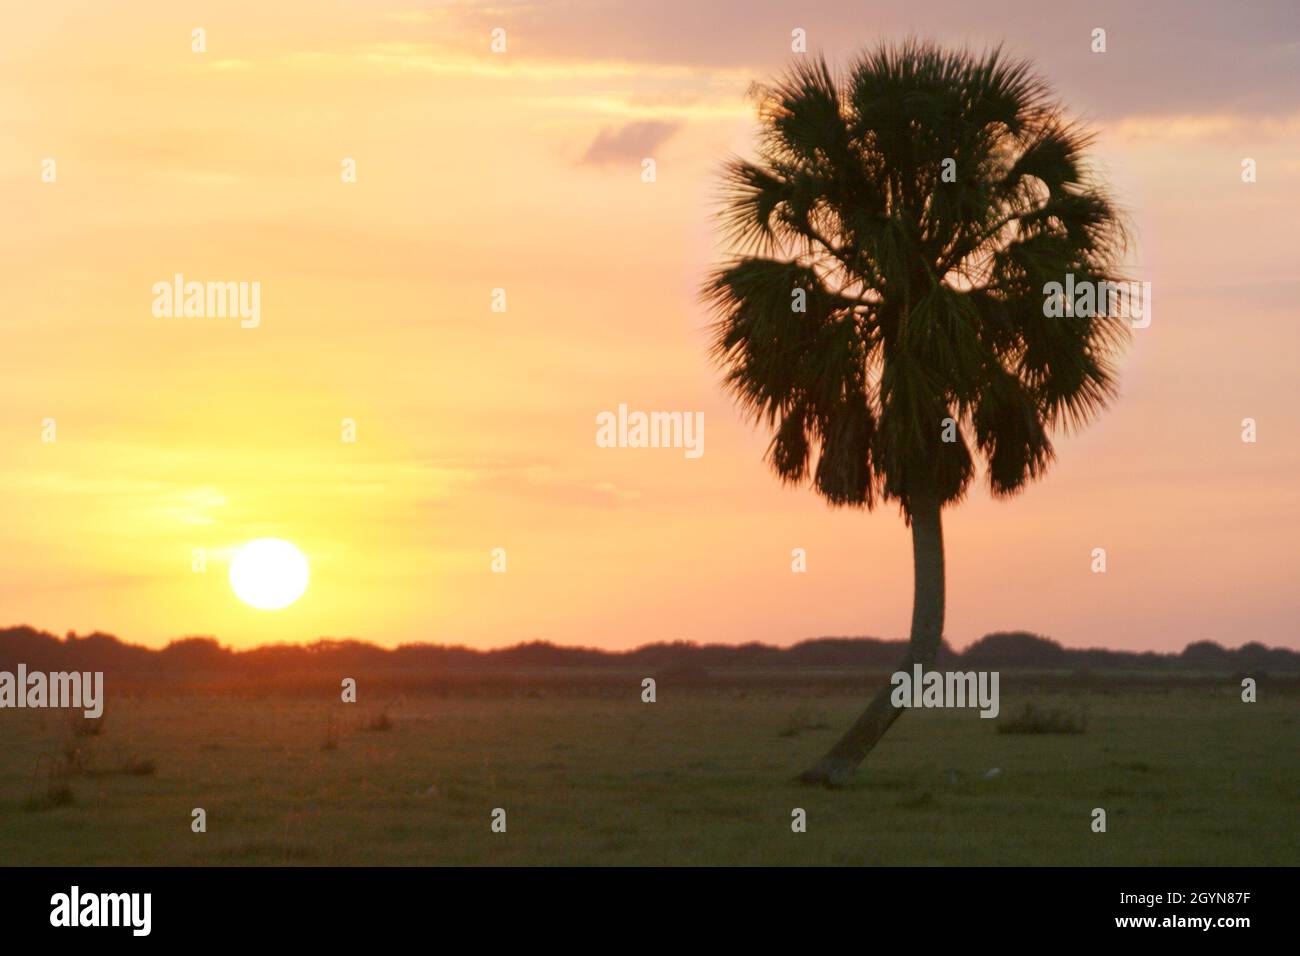 Florida Okeechobee County,sabal palmetto palm tree,sunset scenic scenery nature natural along US 98 Stock Photo